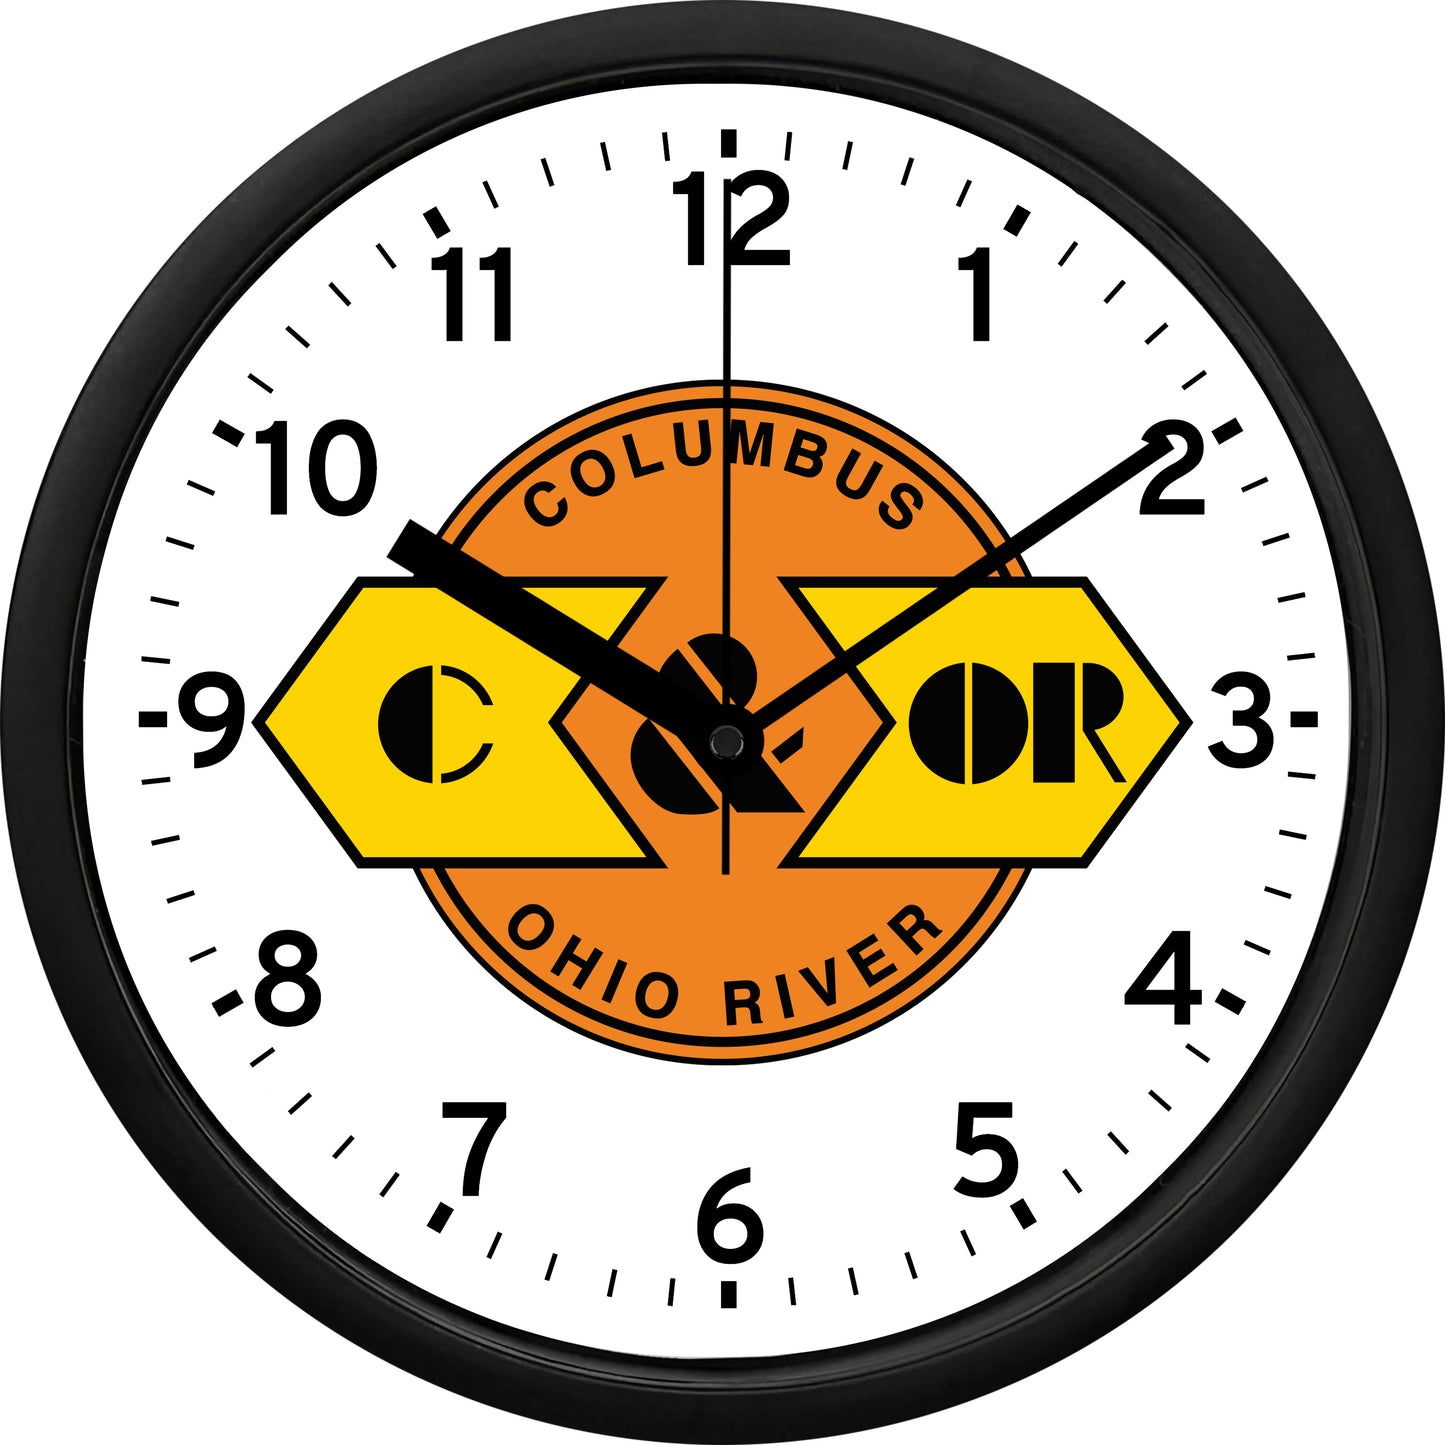 Columbus & Ohio River Railroad Wall Clock